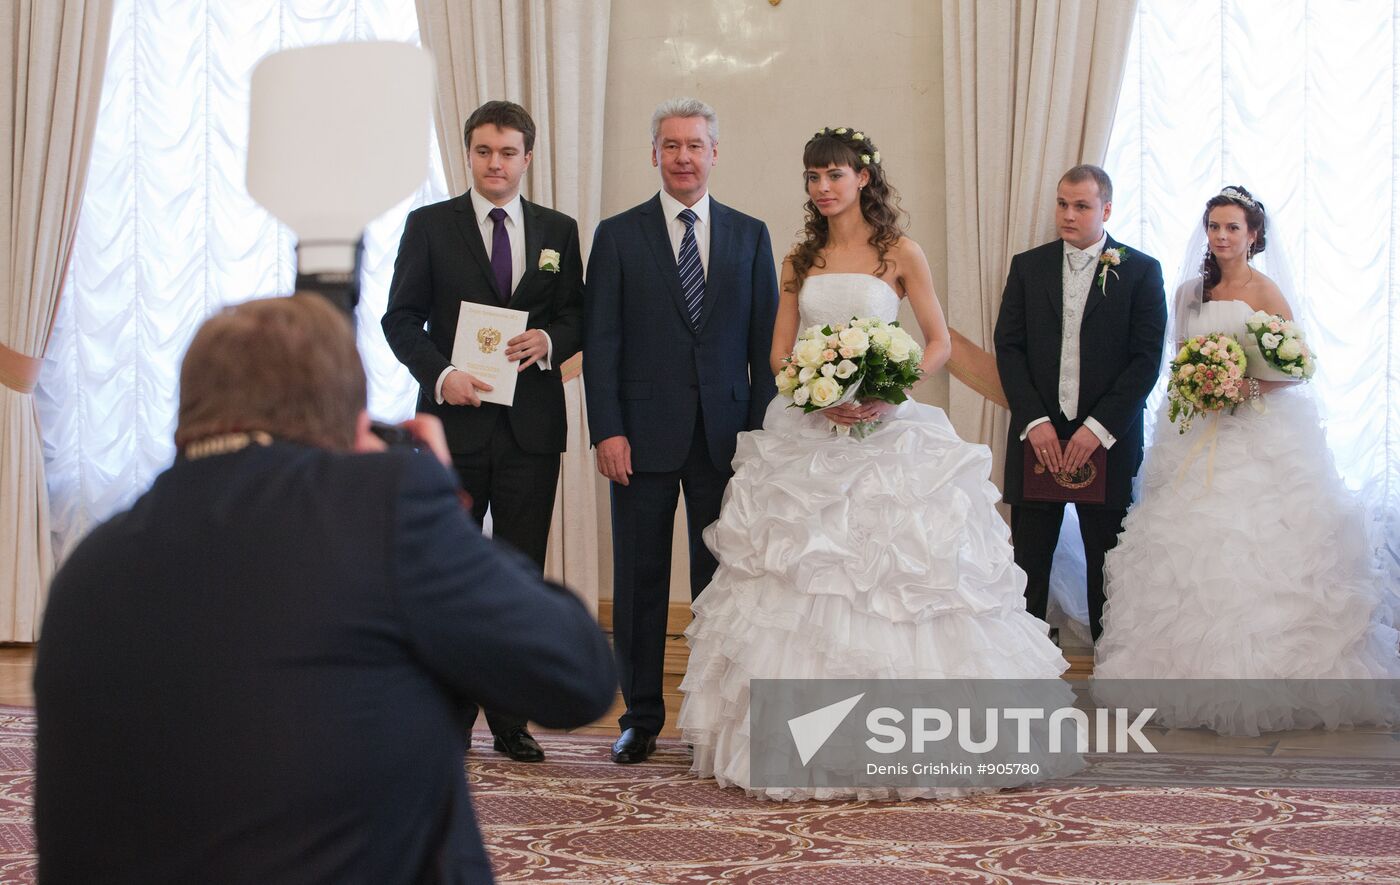 Sergei Sobyanin presents marriage certificate to newlyweds